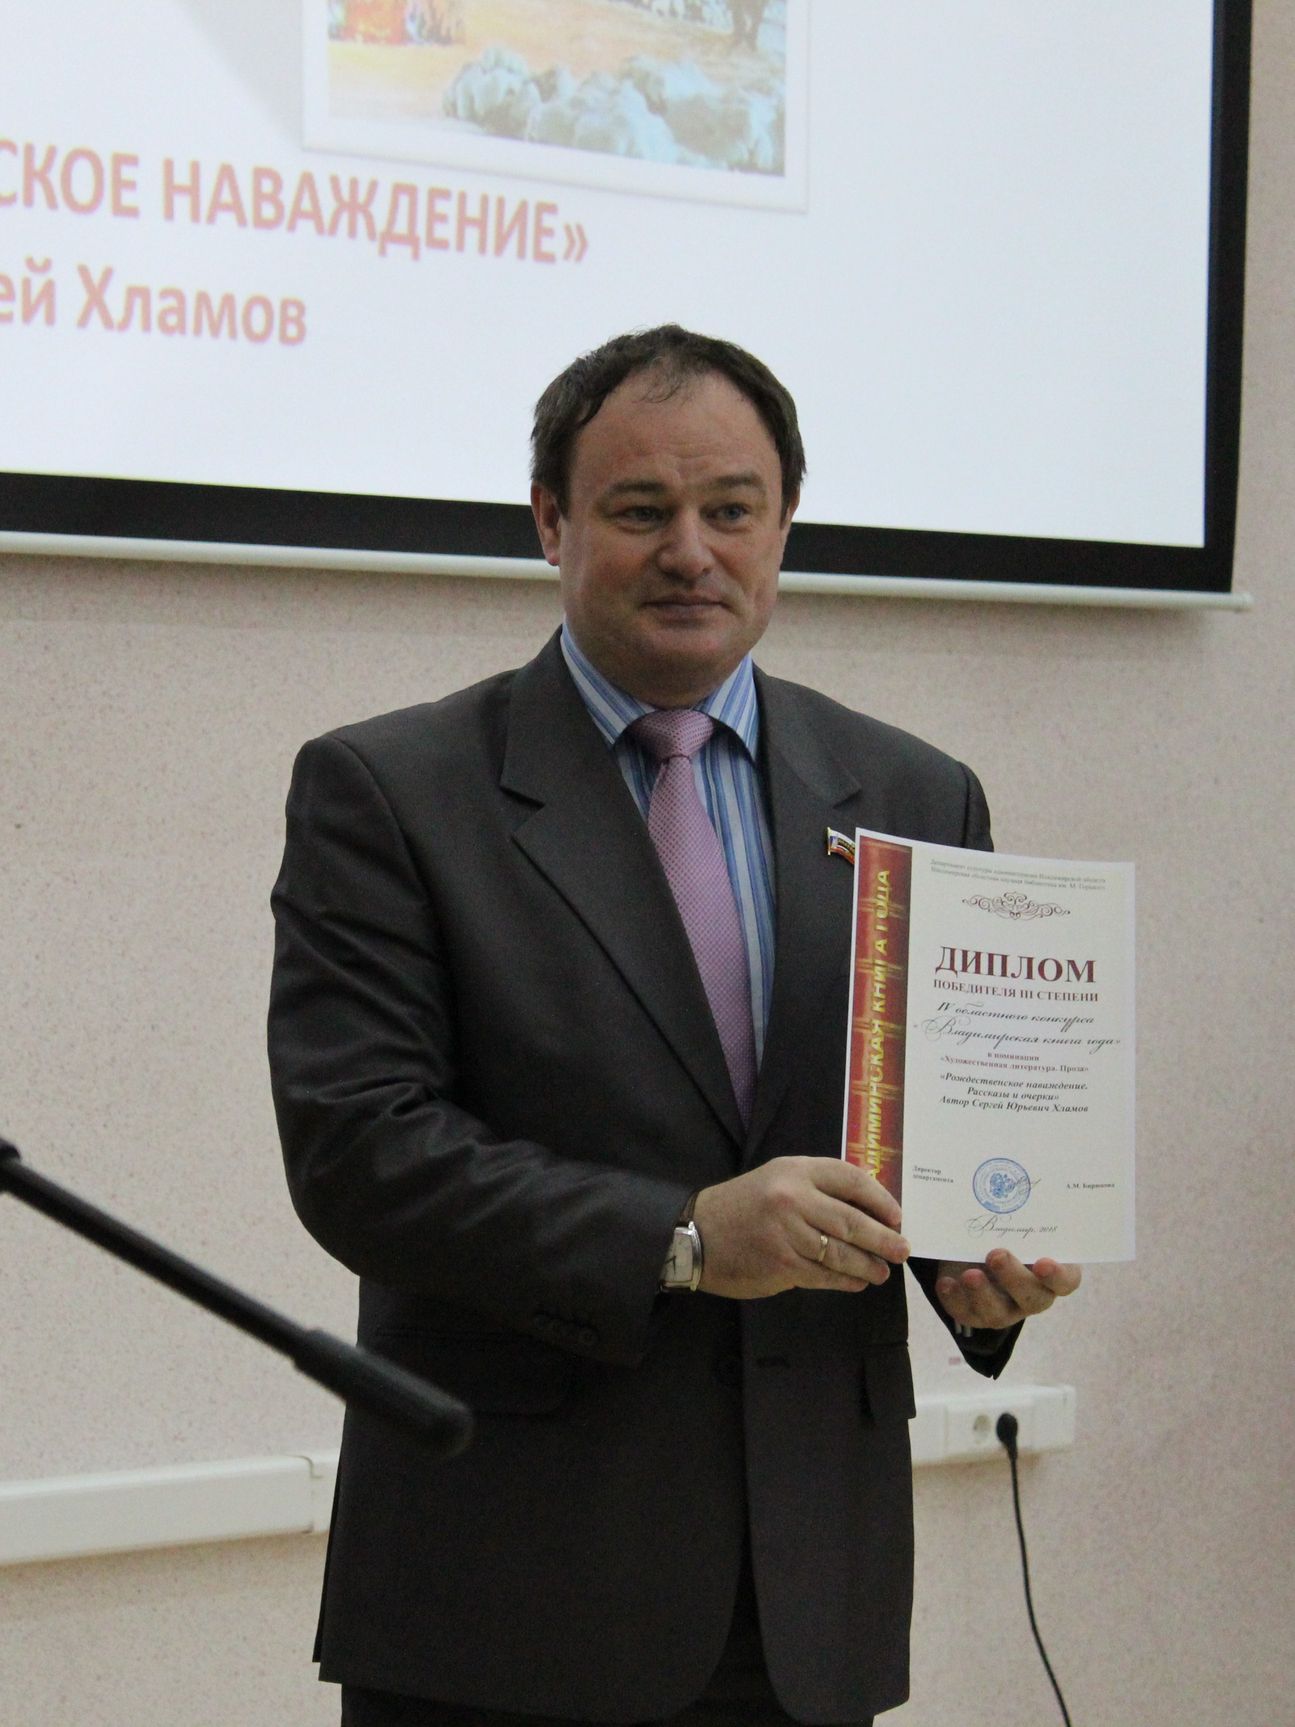 Сергей Хламов